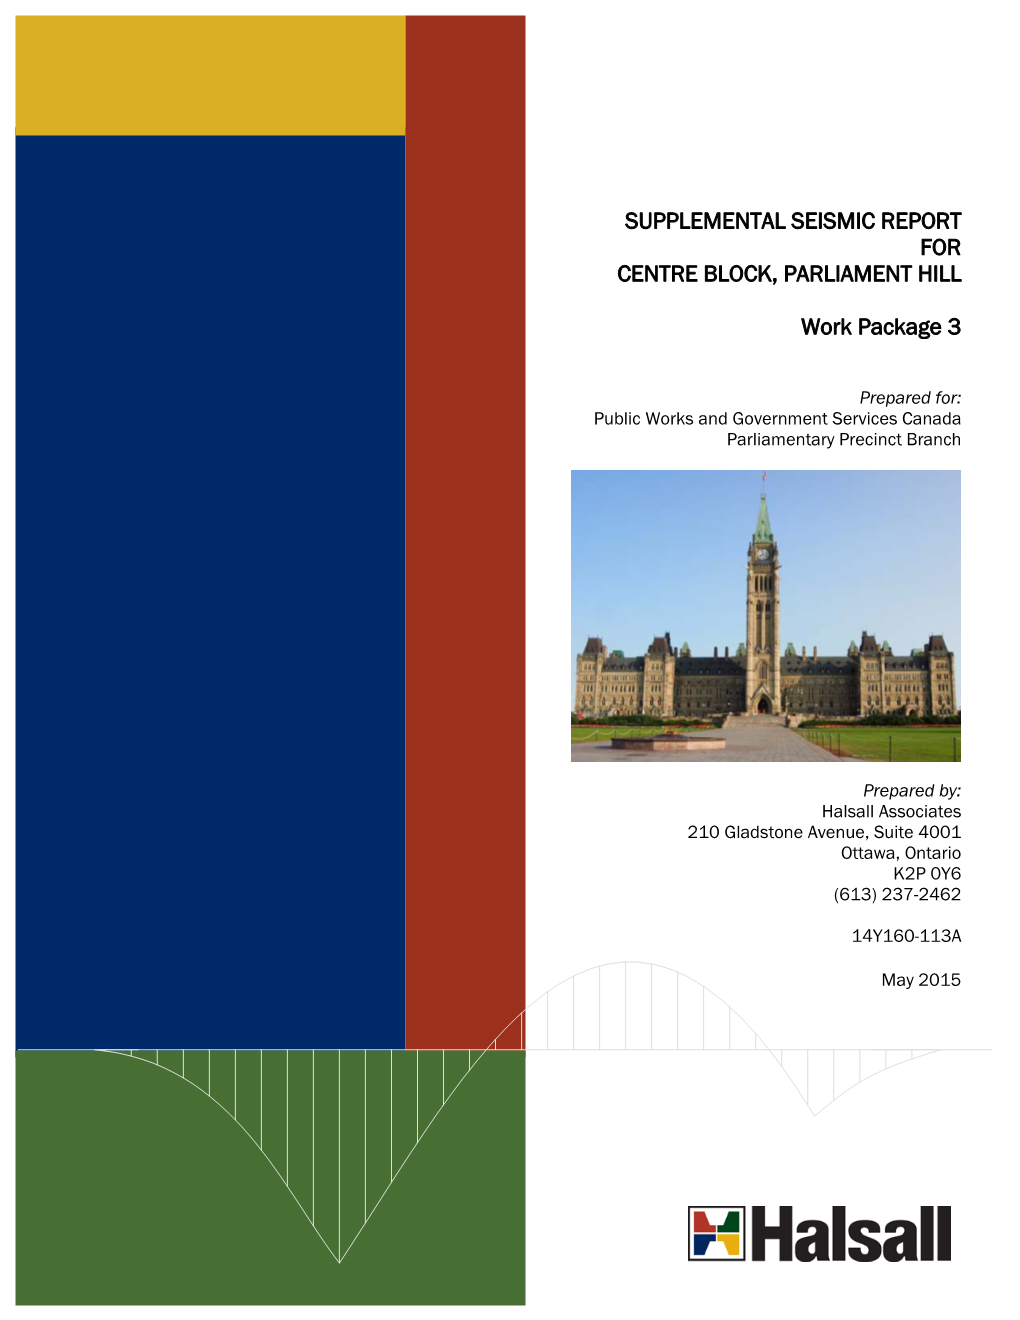 Supplemental Seismic Report for Centre Block, Parliament Hill